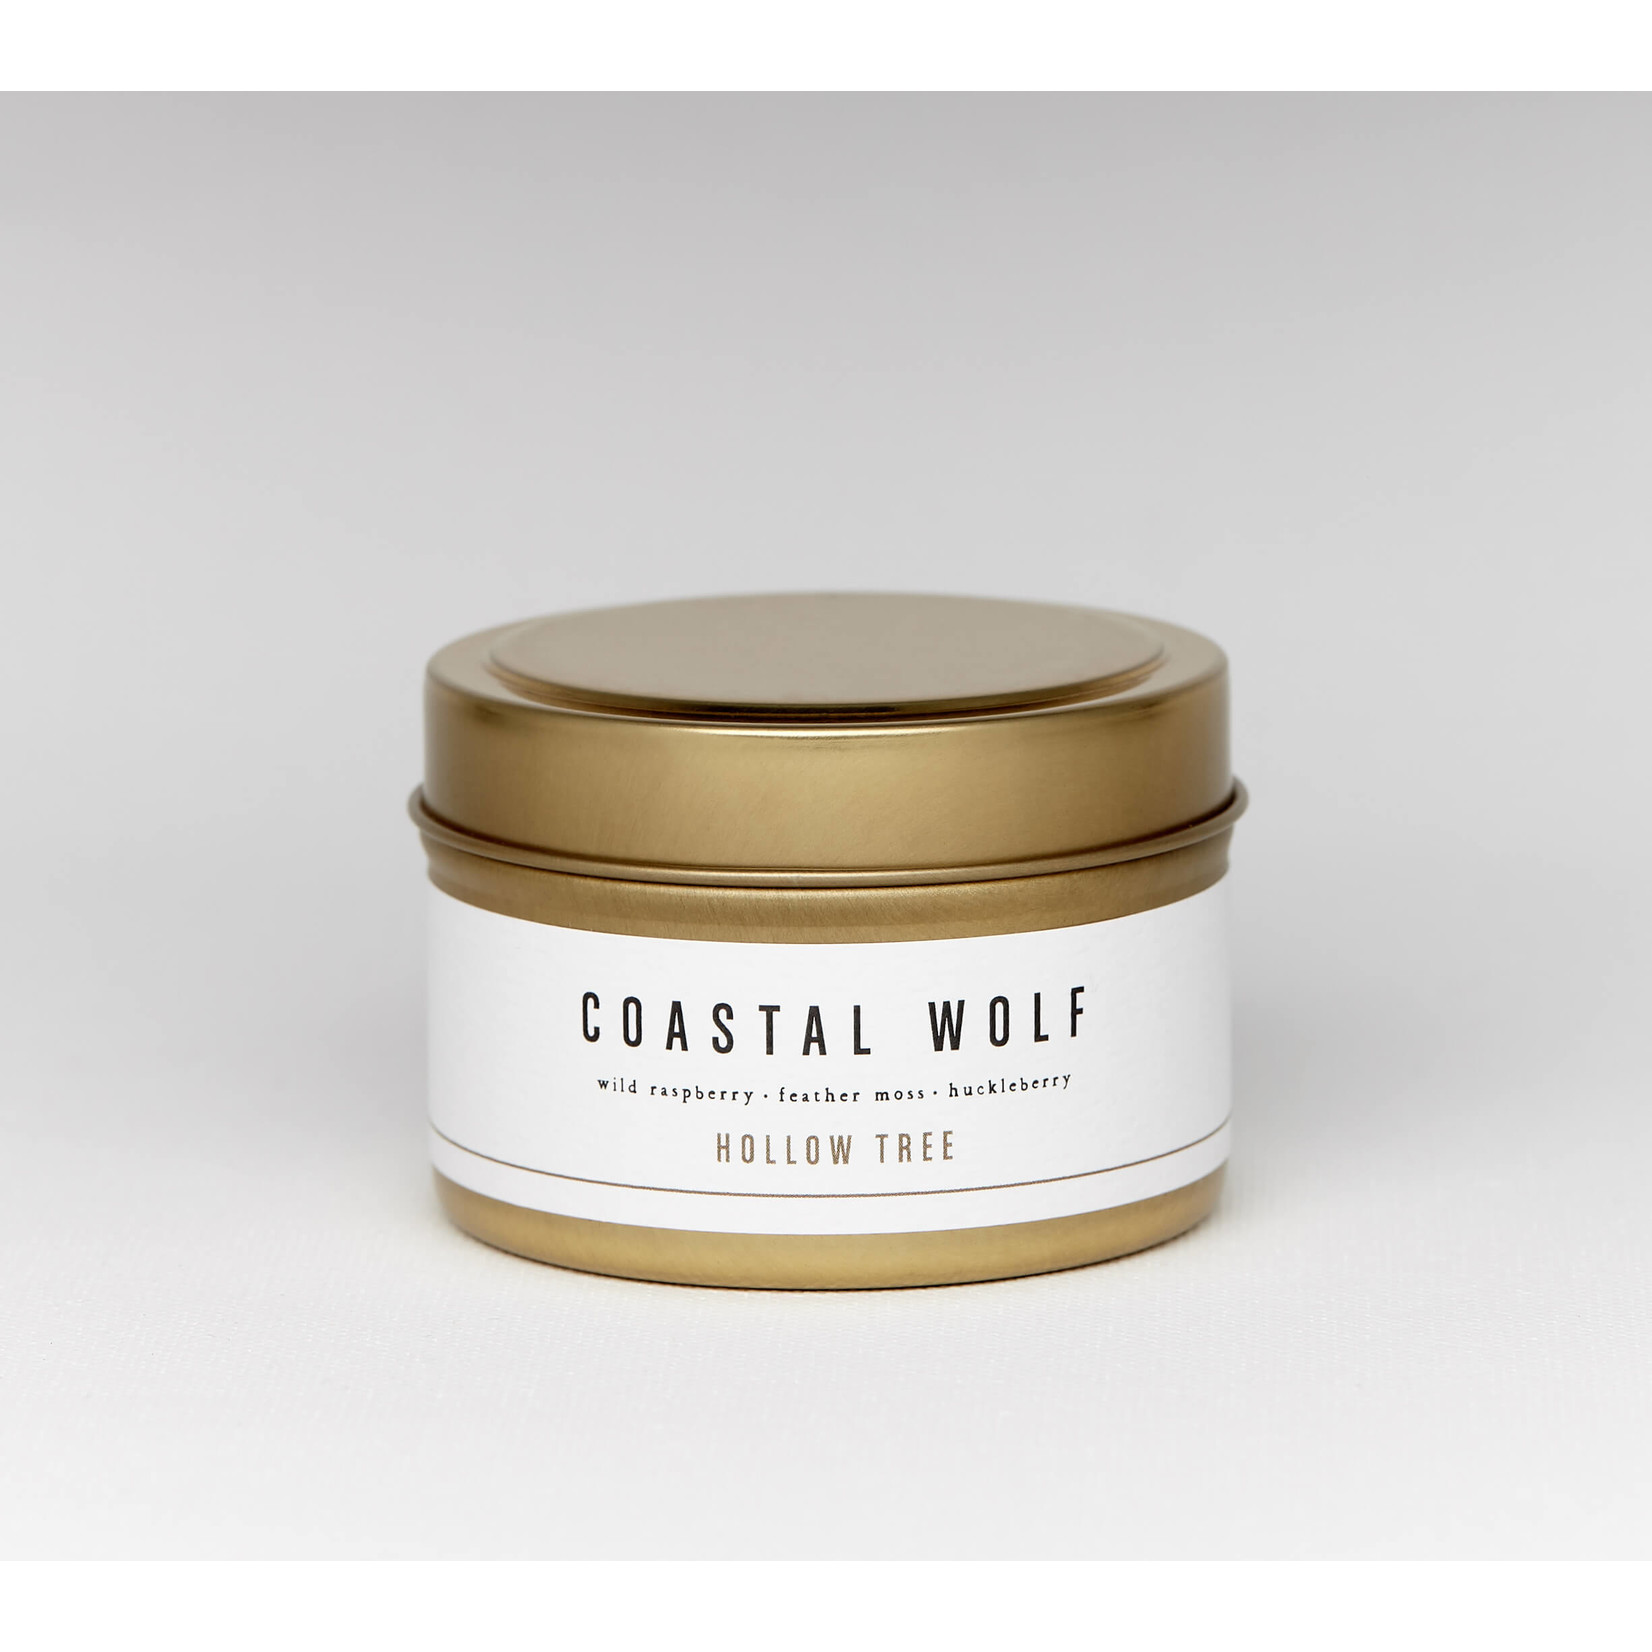 Hollow Tree Coastal Wolf Travel Candle - 4oz